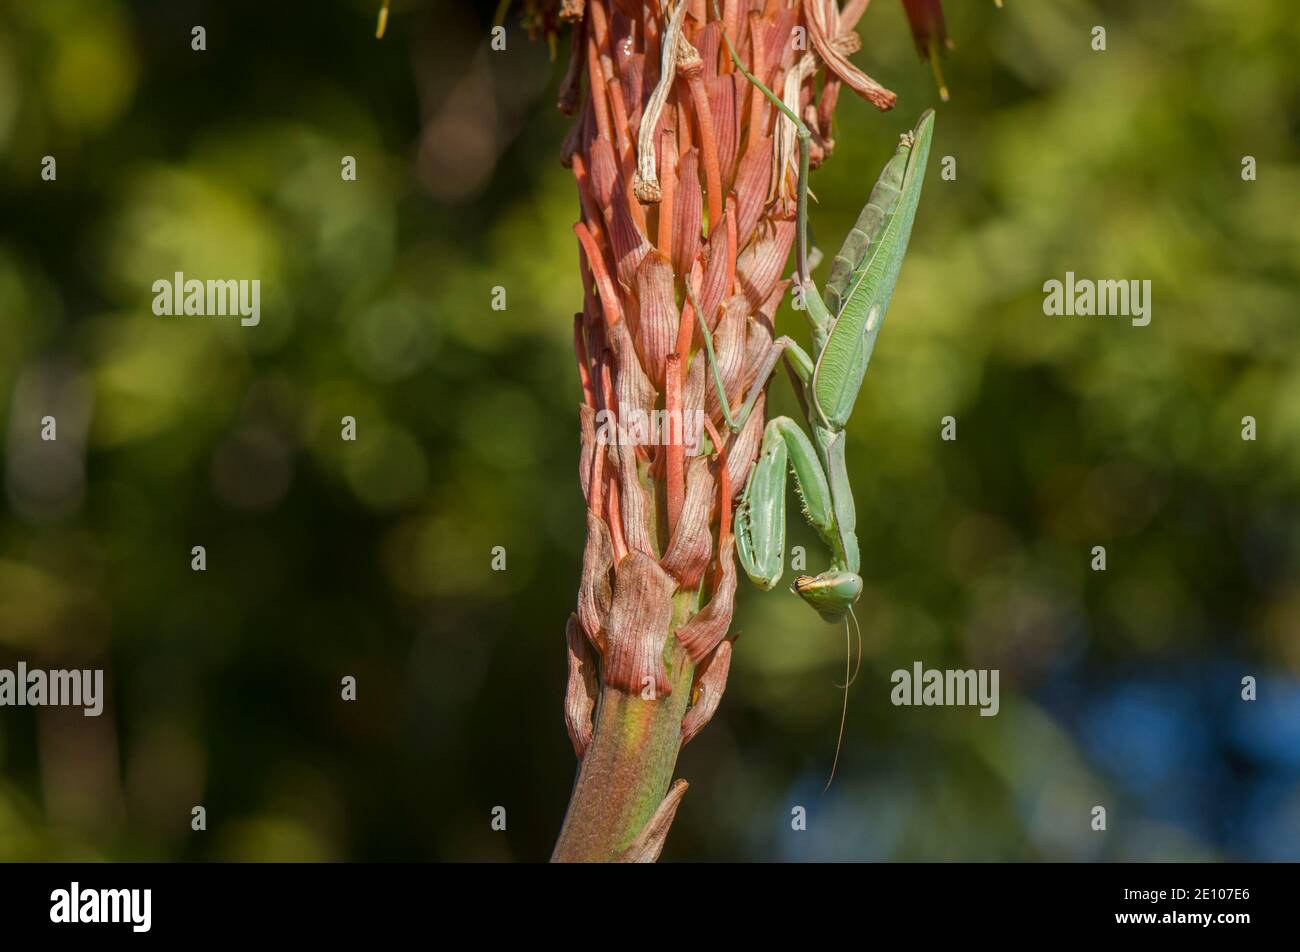 Eine Gottesanbeterin, eine Gottesanbeterin, eine Gottesanbeterin, eine Gottesanbeterin, eine Gottesanbeterin, eine Gottesanbeterin auf Aloe arborescens, Andalusien, Spanien. Stockfoto